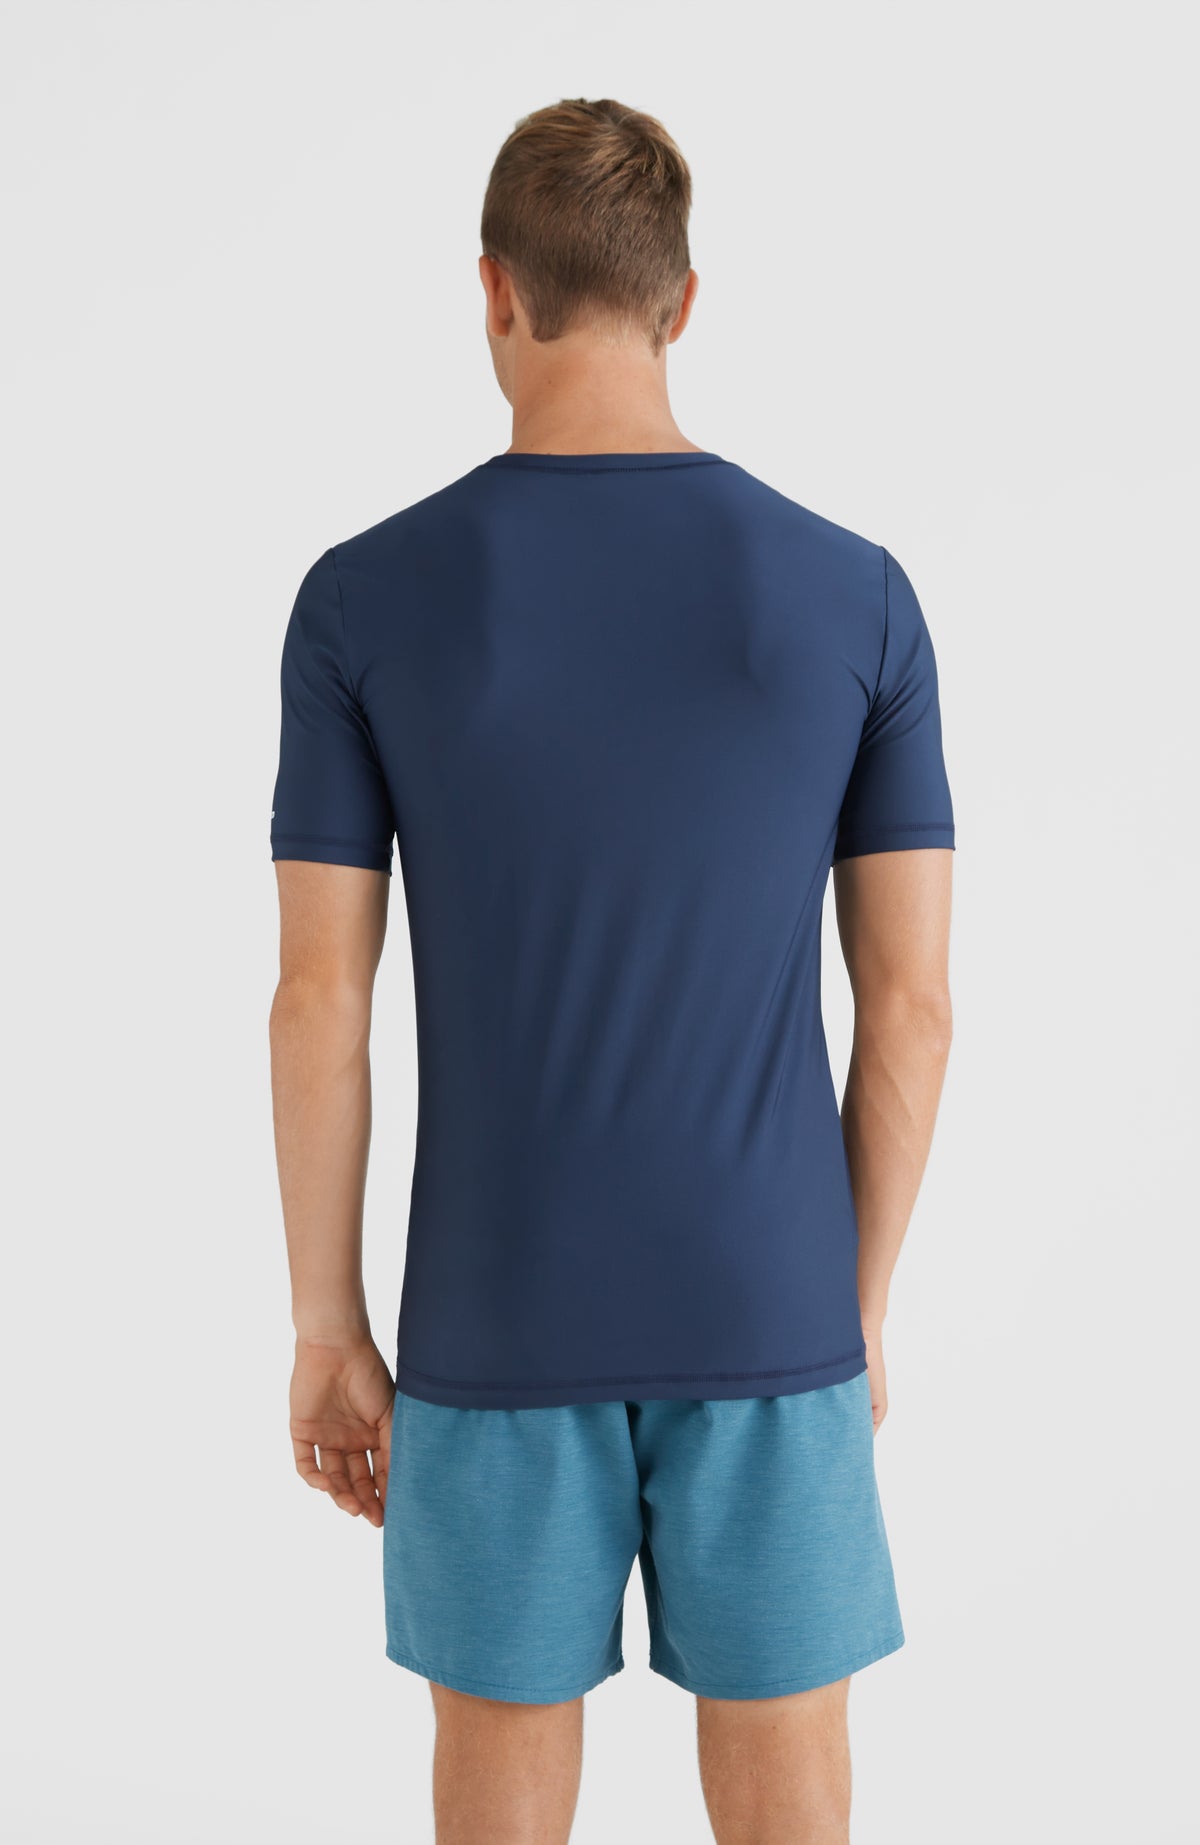 Cali Longsleeve UPF 50+ Sun Shirt Skin